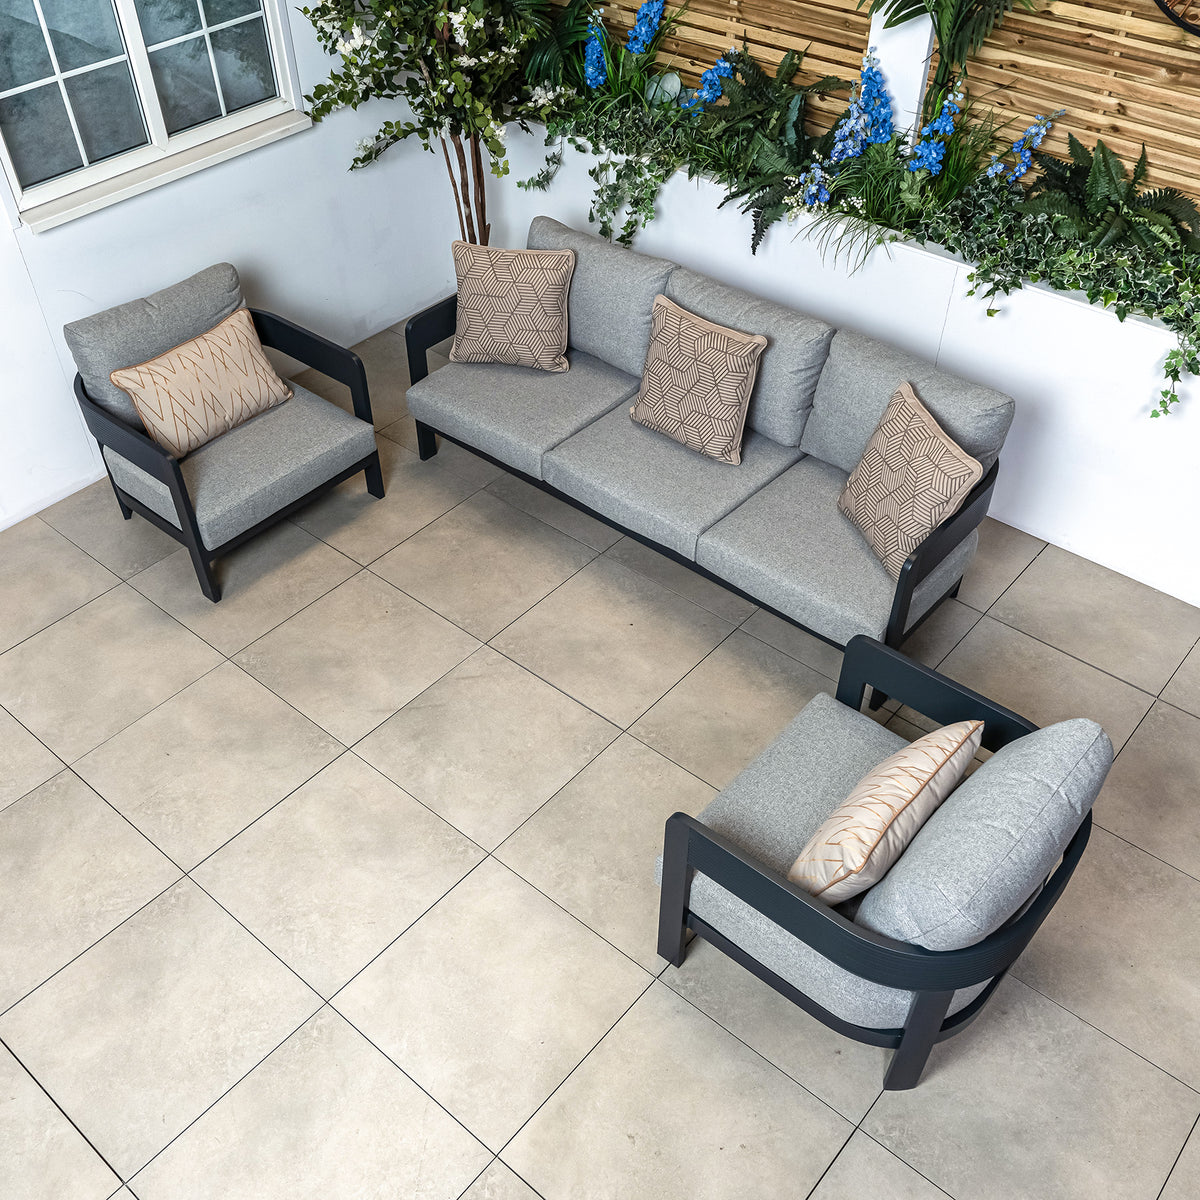 Bracken Outdoors Nevada Anthracite Ripple Aluminium Lounge Garden Furniture Sofa Set